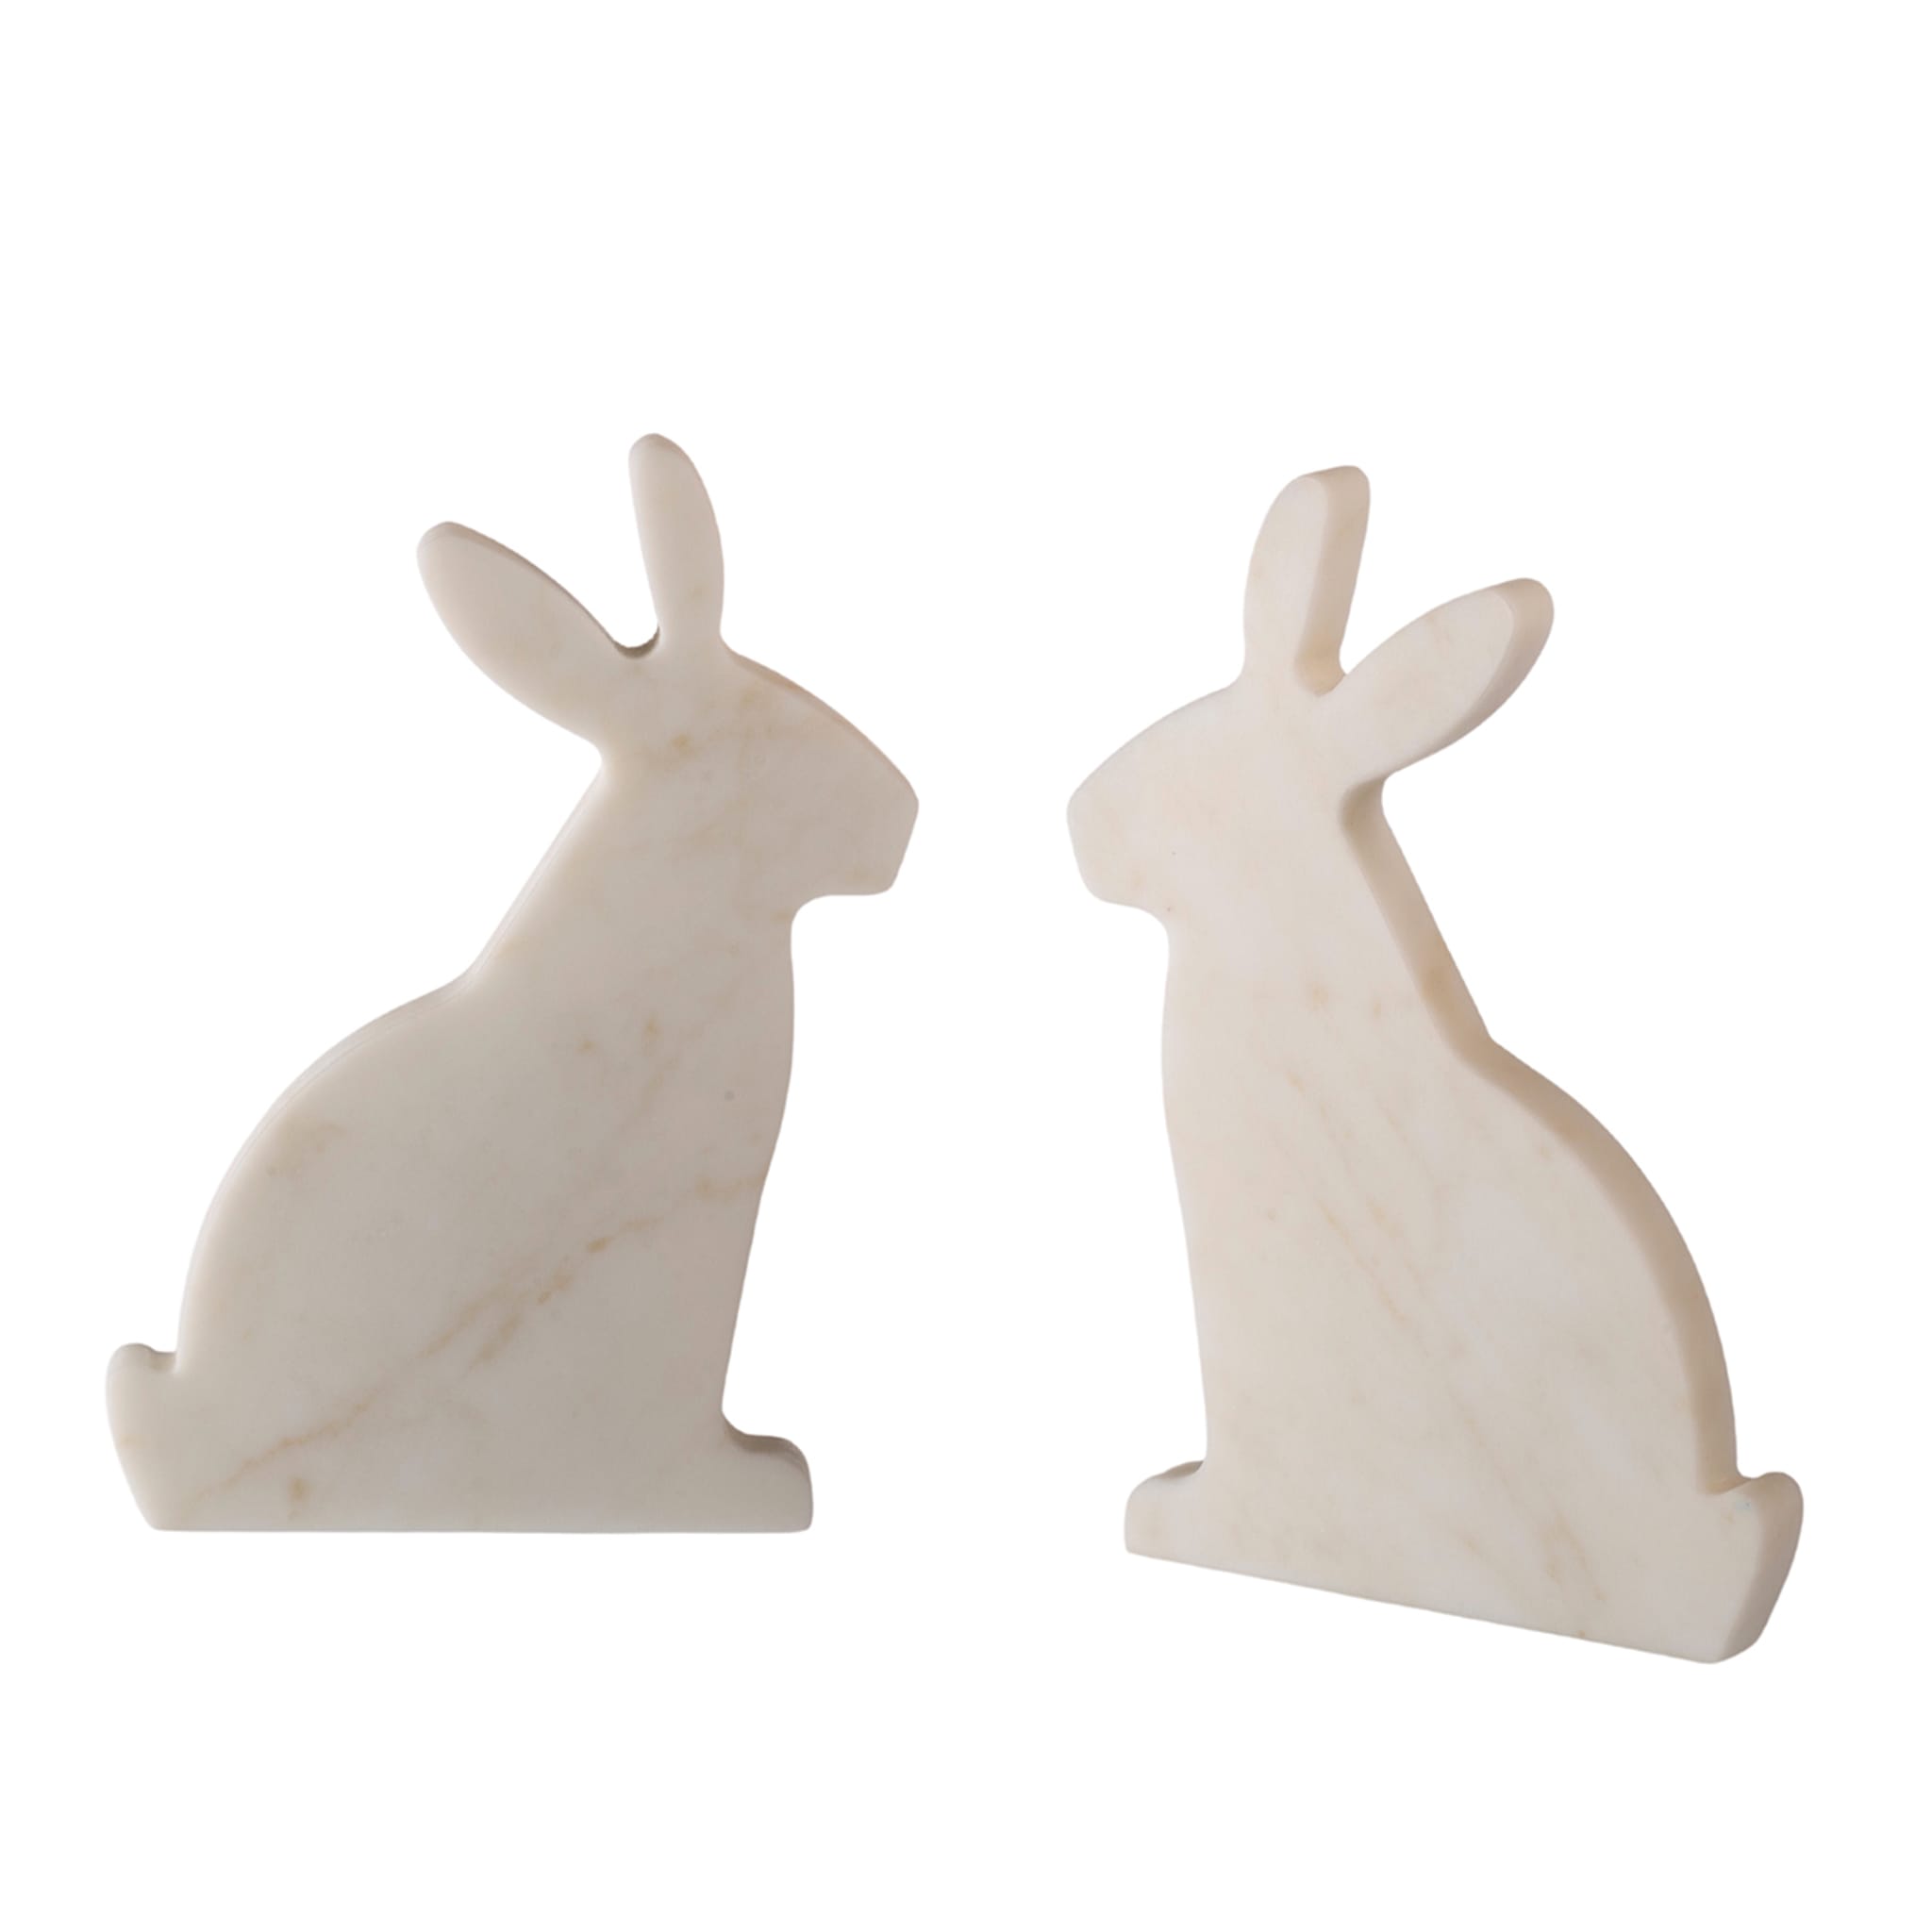 Bunny Set of 2 White Carrara Bookends by Alessandra Grasso - Alternative view 3